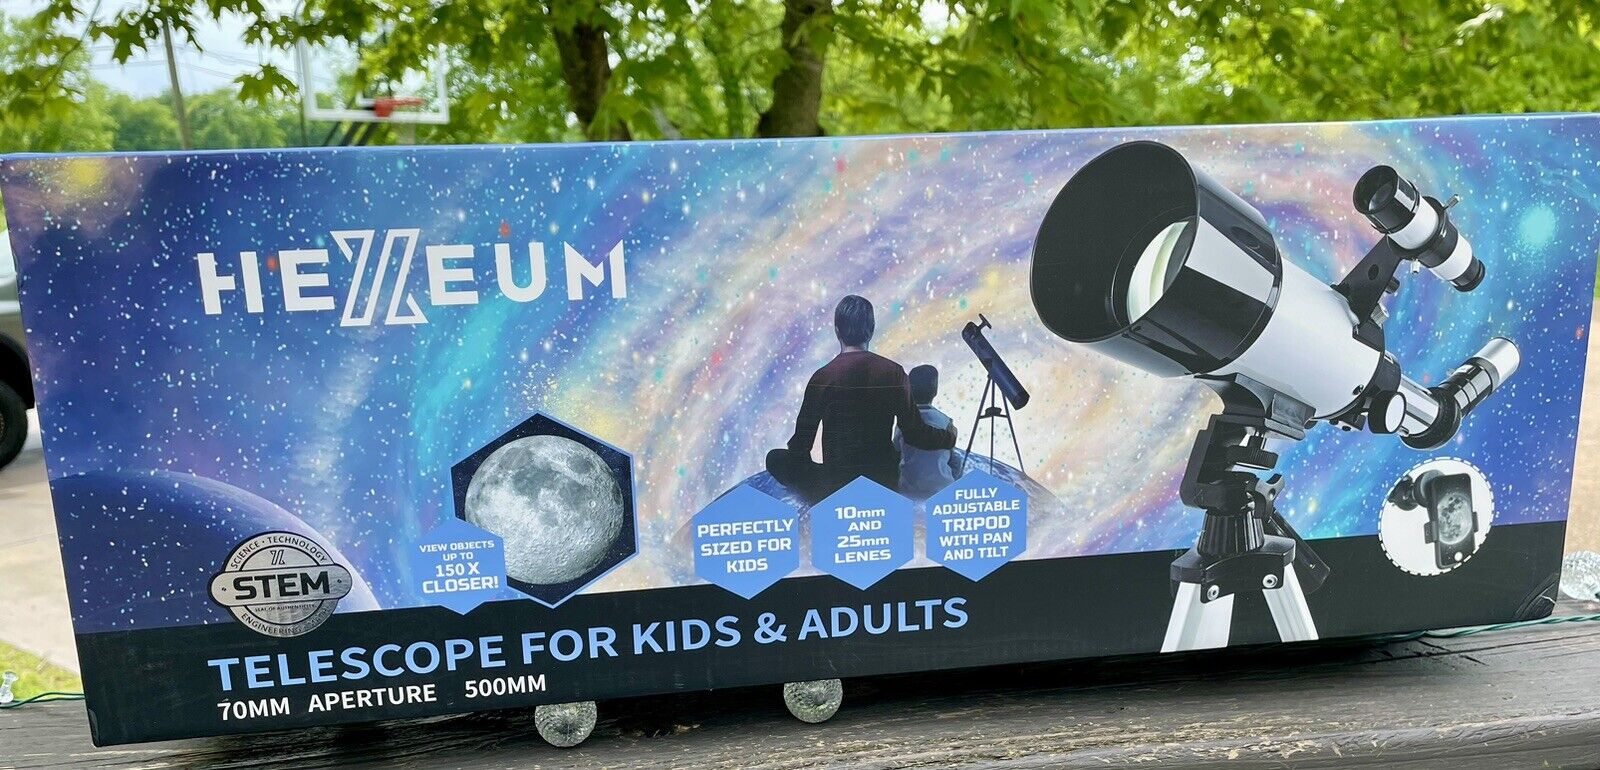 Hexeum Telescope Kids Adults 70mm Aperture 500mm 150x Closer View Carrying Case